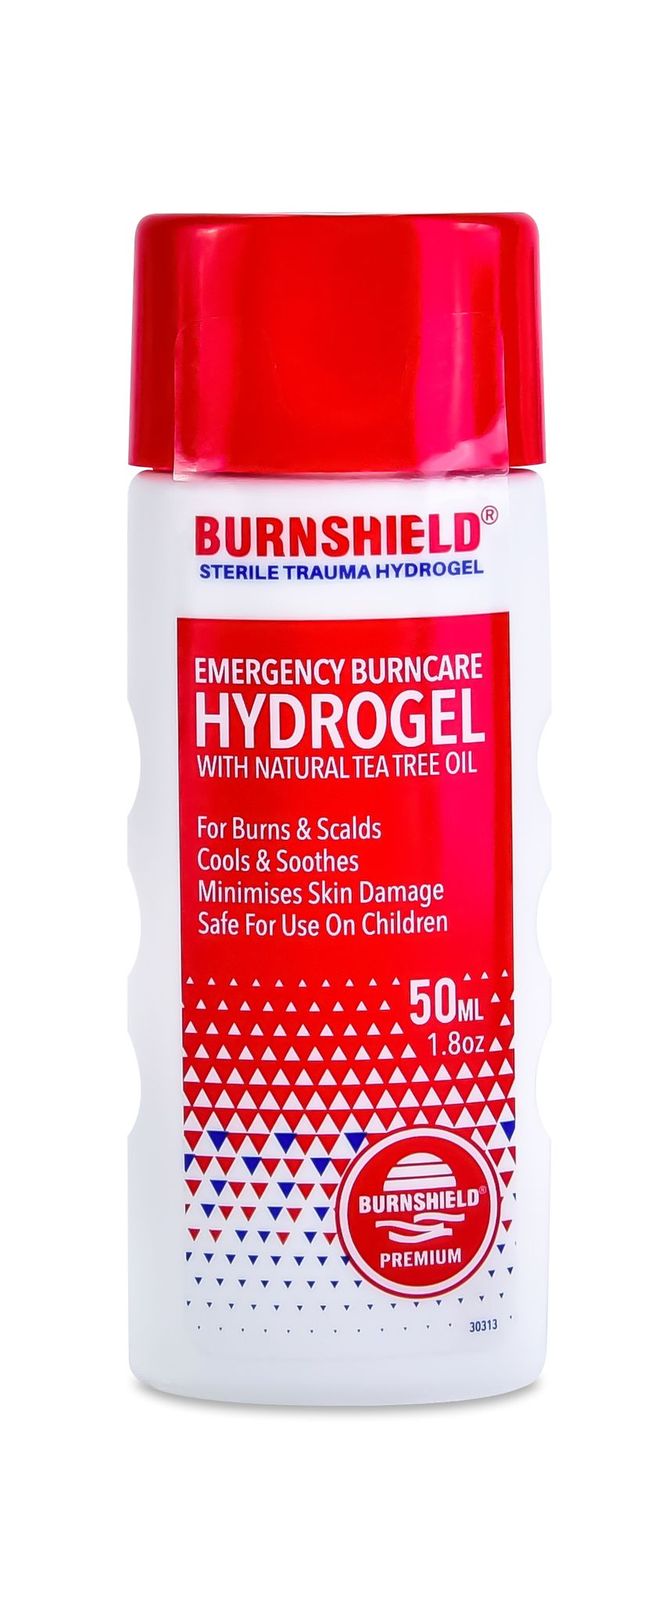 Burnshield Hyrdogel Treatment of Minor Burns, Scalds & Sunburn 50ml